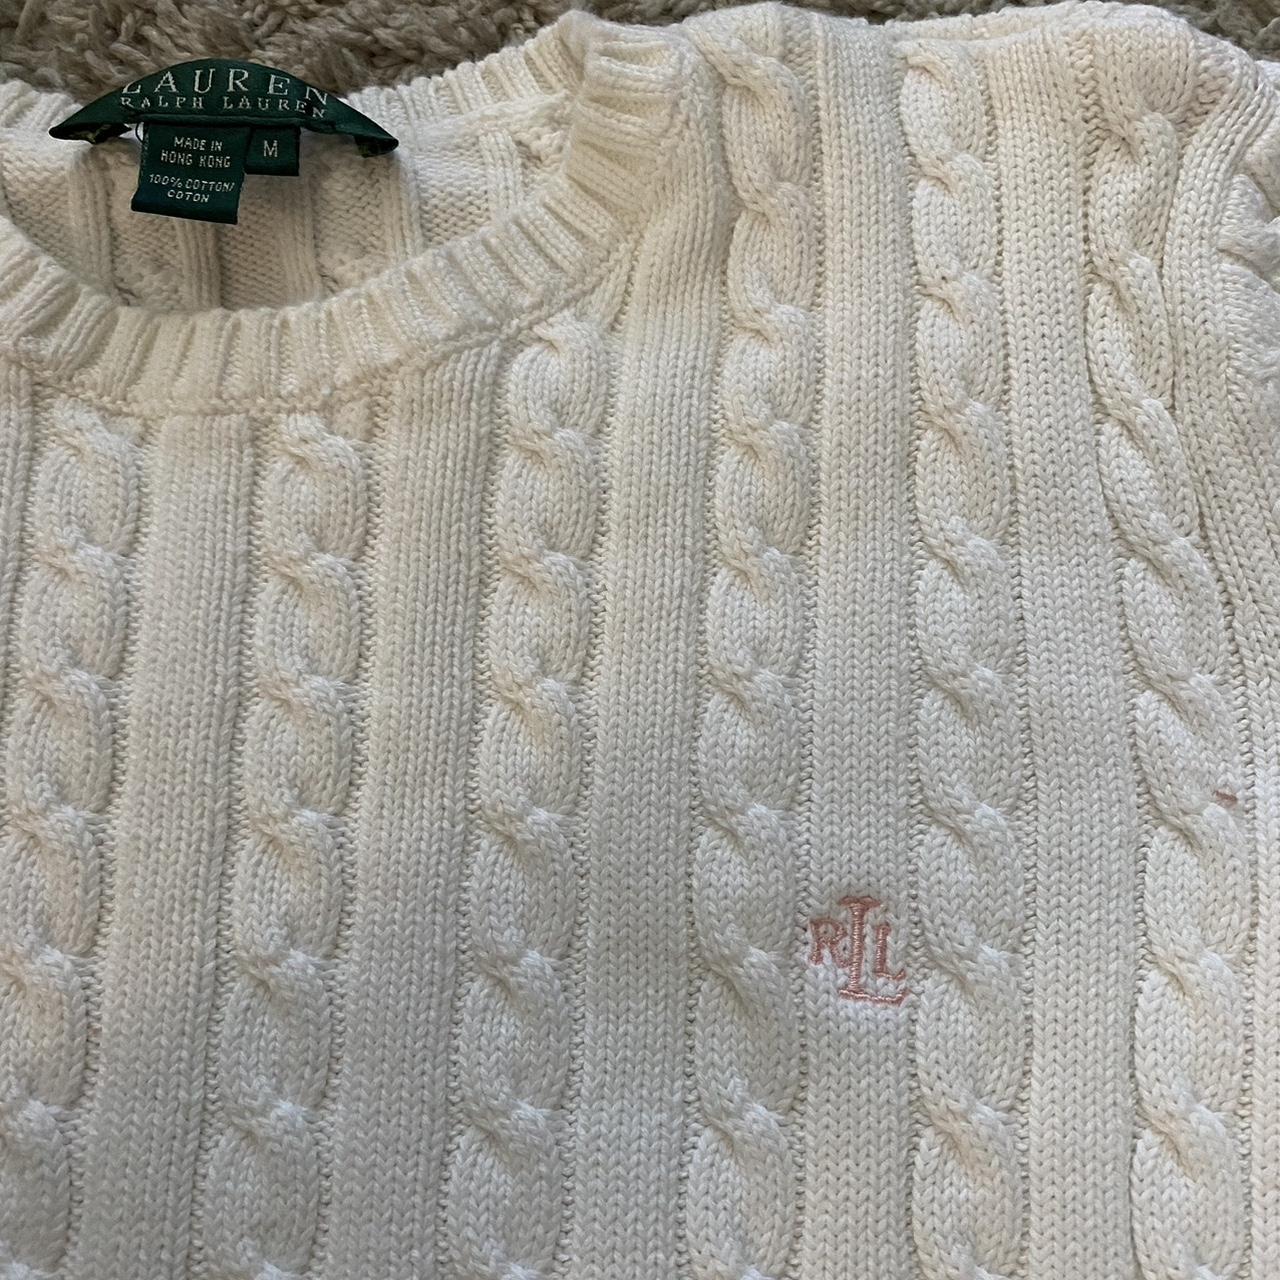 Lauren Ralph Lauren cable knit white sweater with... - Depop